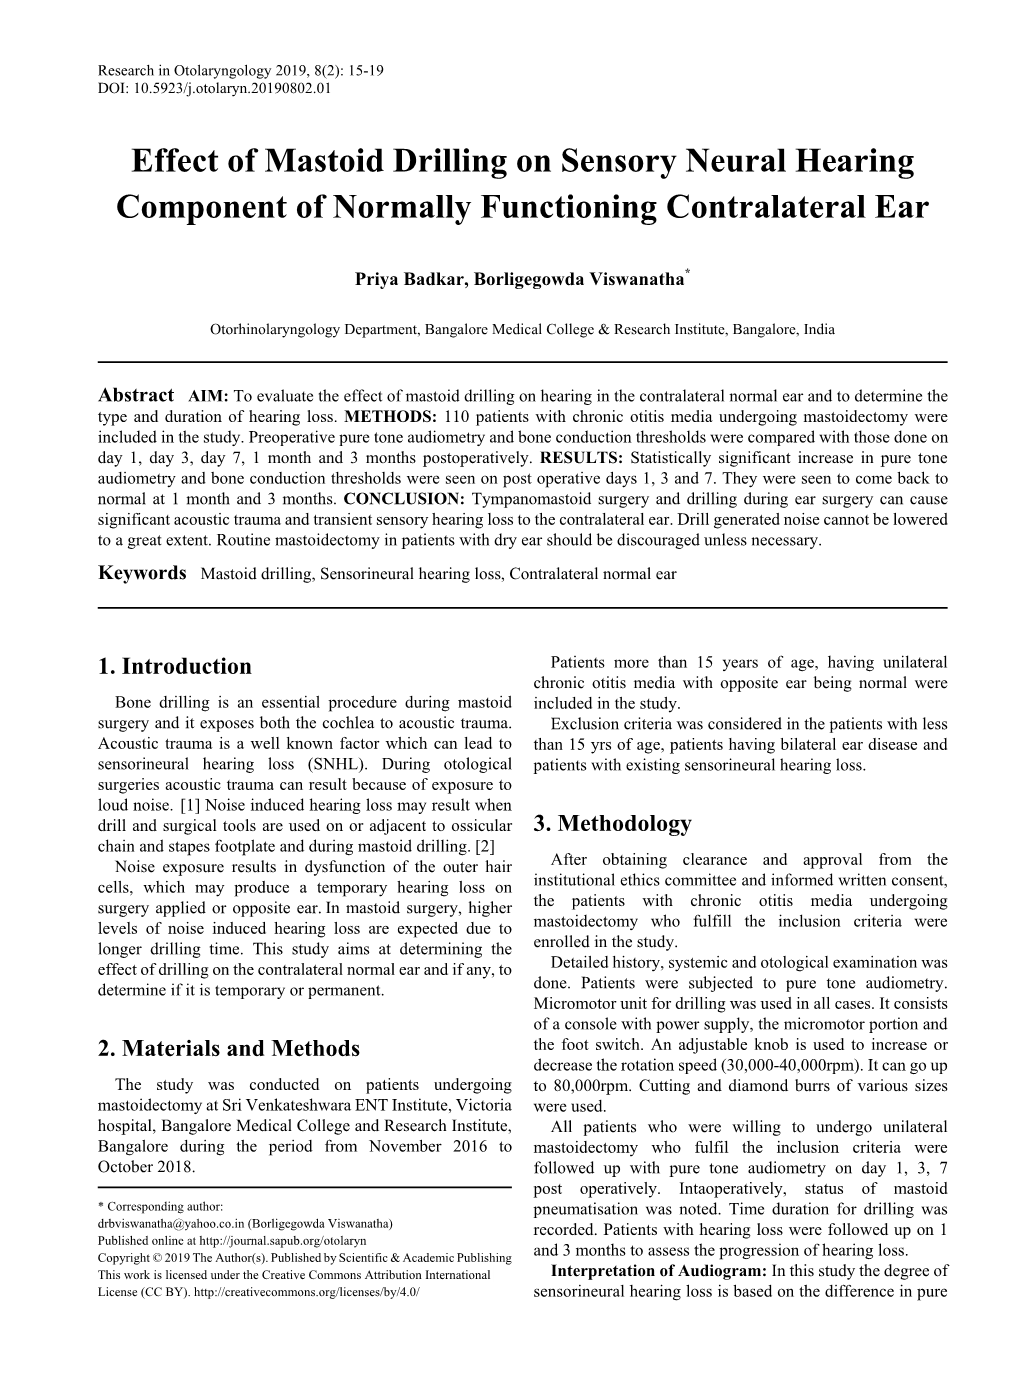 Mastoid Drilling, Sensorineural Hearing Loss, Contralateral Normal Ear